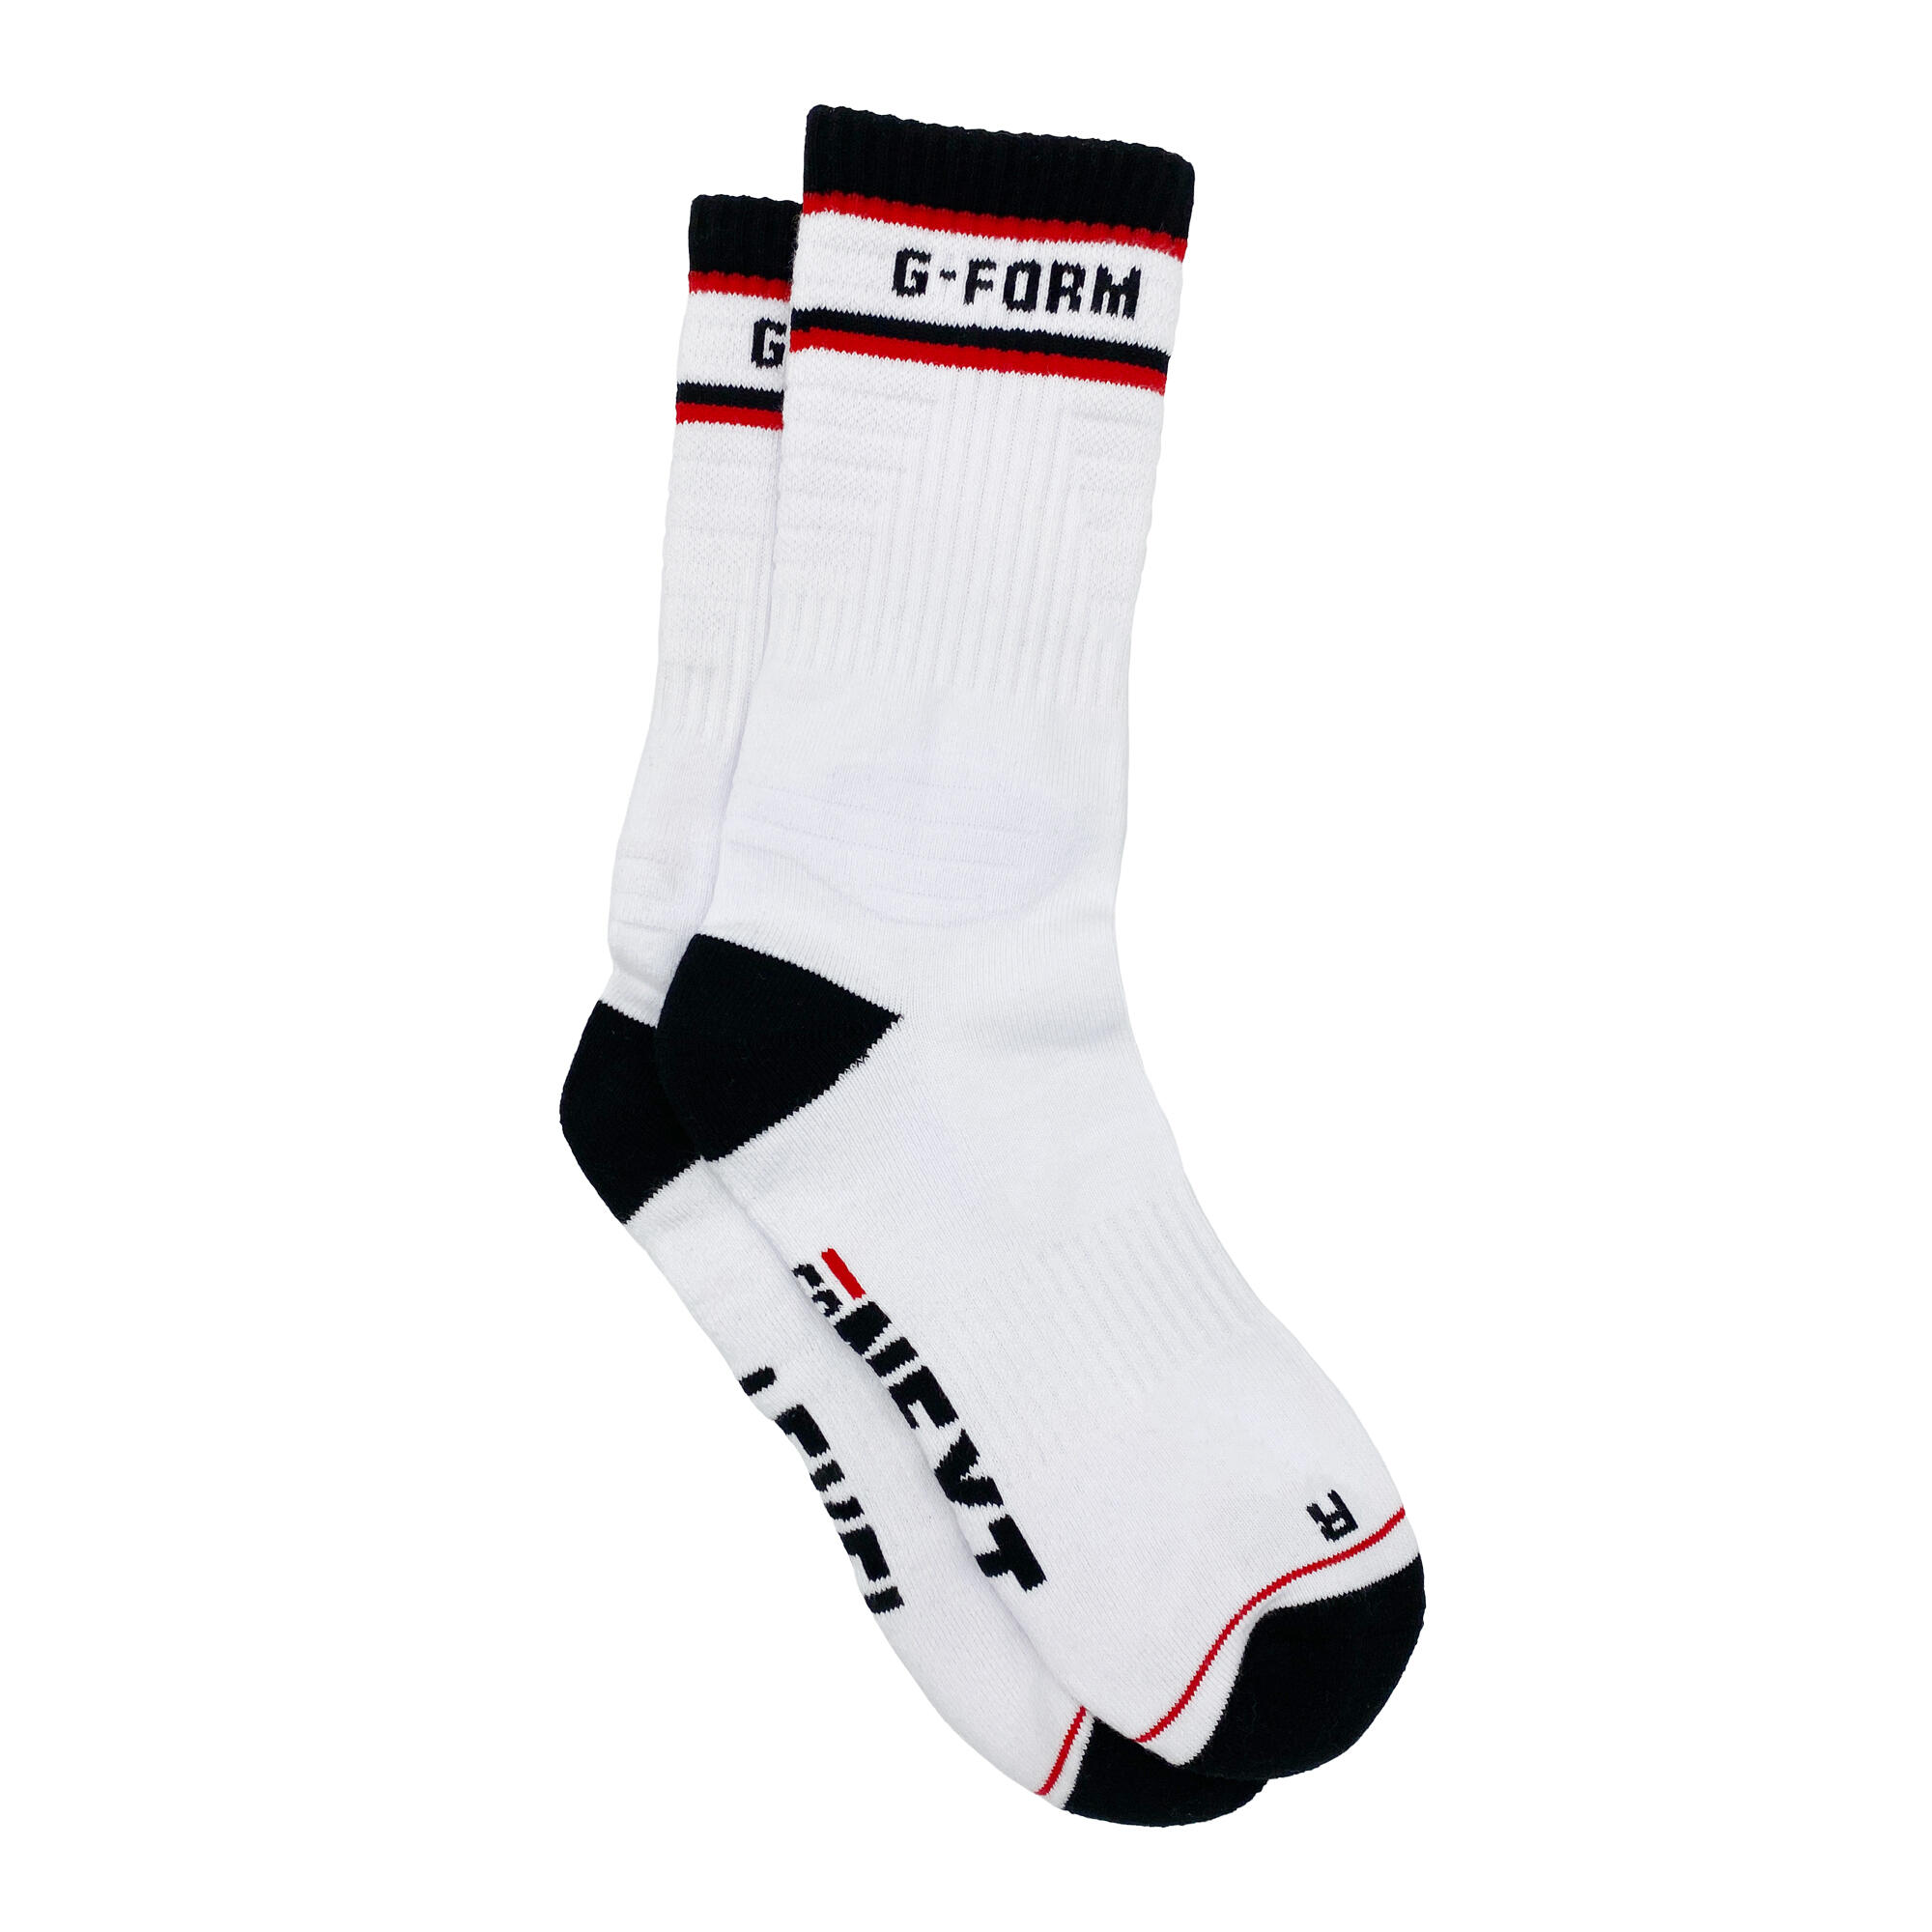 G-FORM G-Form Mid-Calf Sock White Black Red S/M